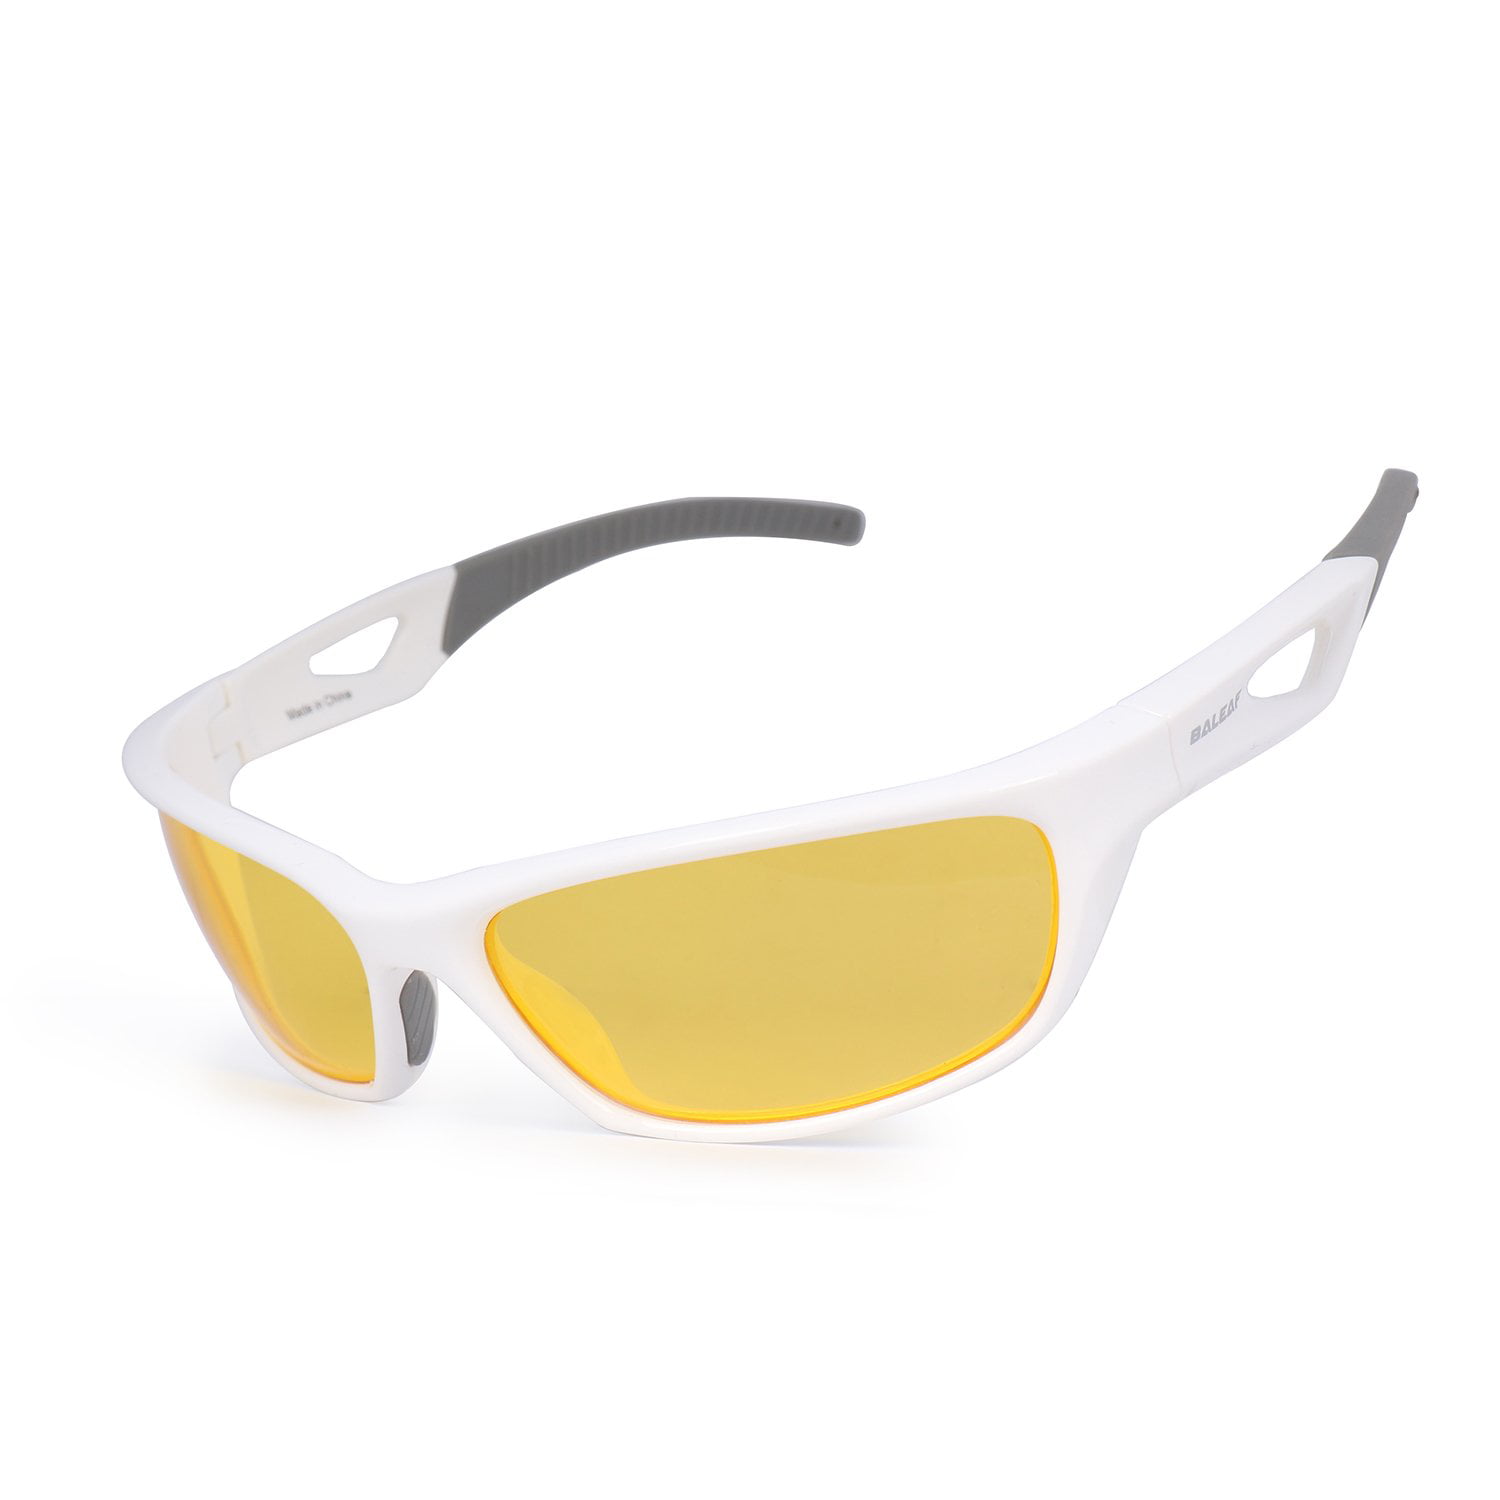 BALEAF Superlight Polarized Sports Sunglasses Tr90 Cycling Bike Eyewear with Adjustable Nose Piece for Men Women